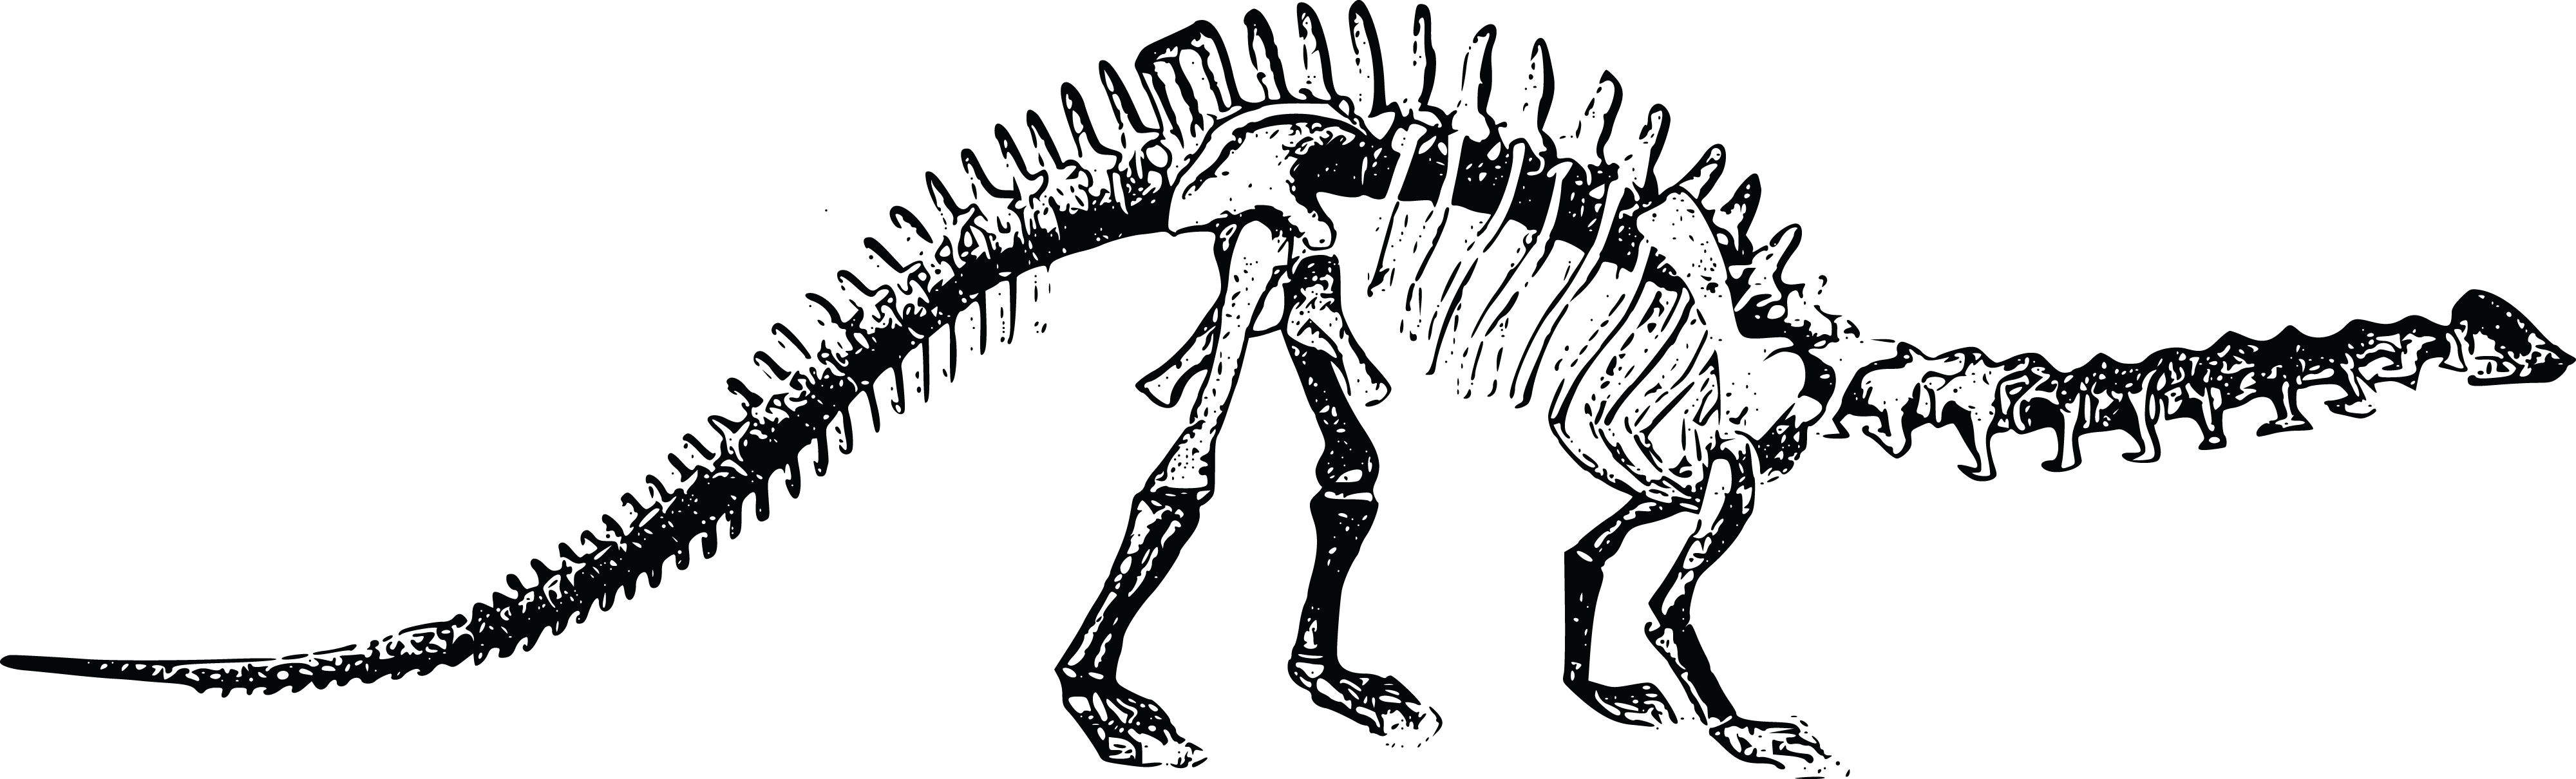 Dinosaur Skeleton SVG